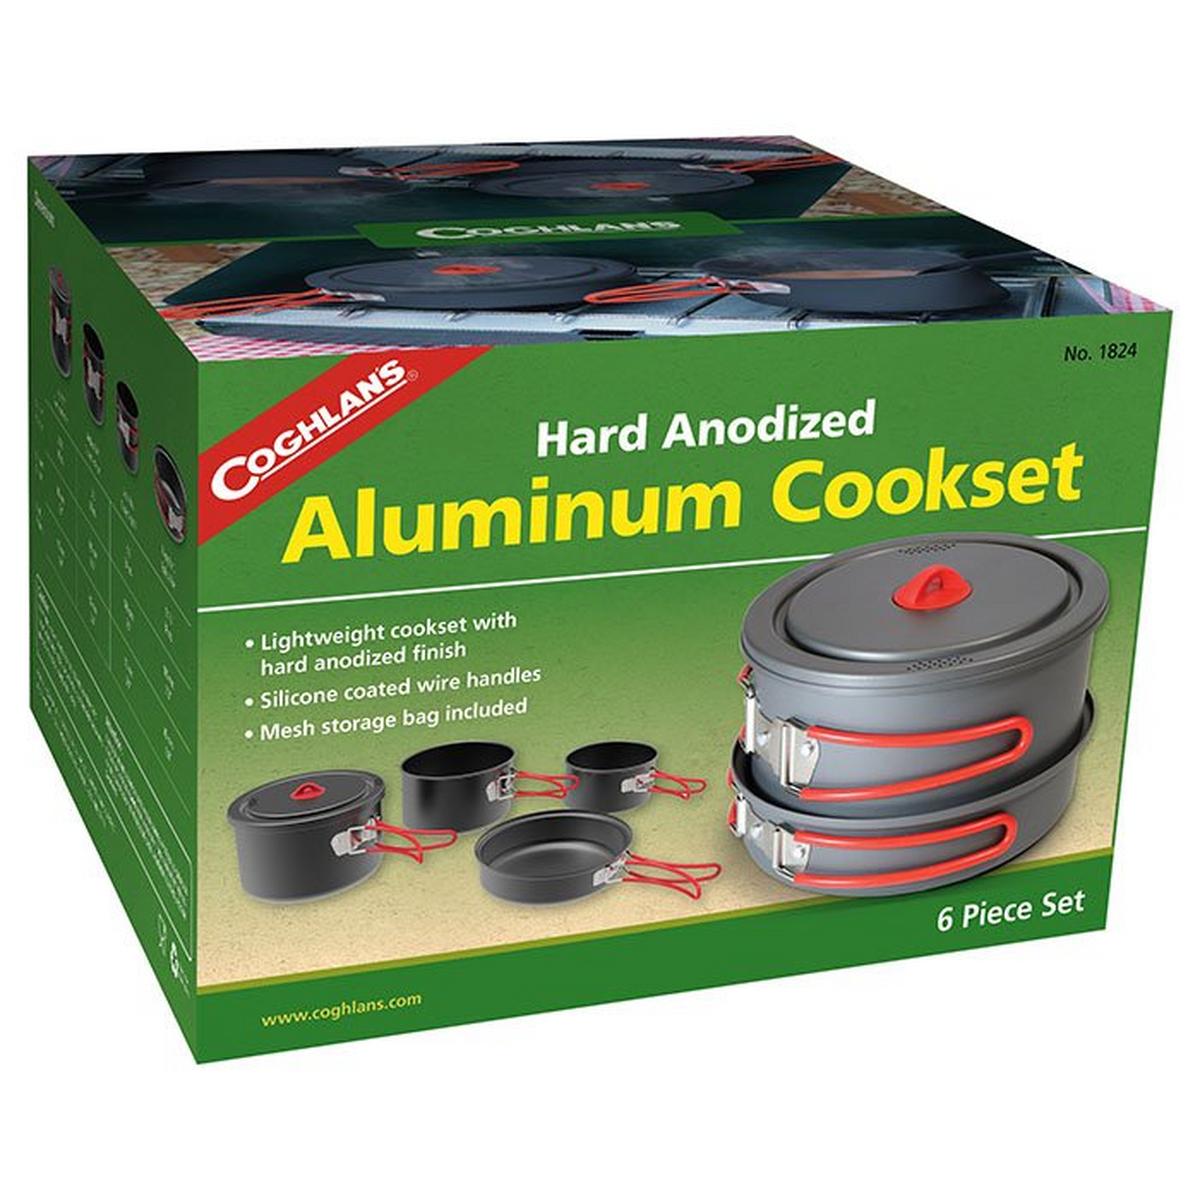 Hard Anodized Aluminum Cook Set